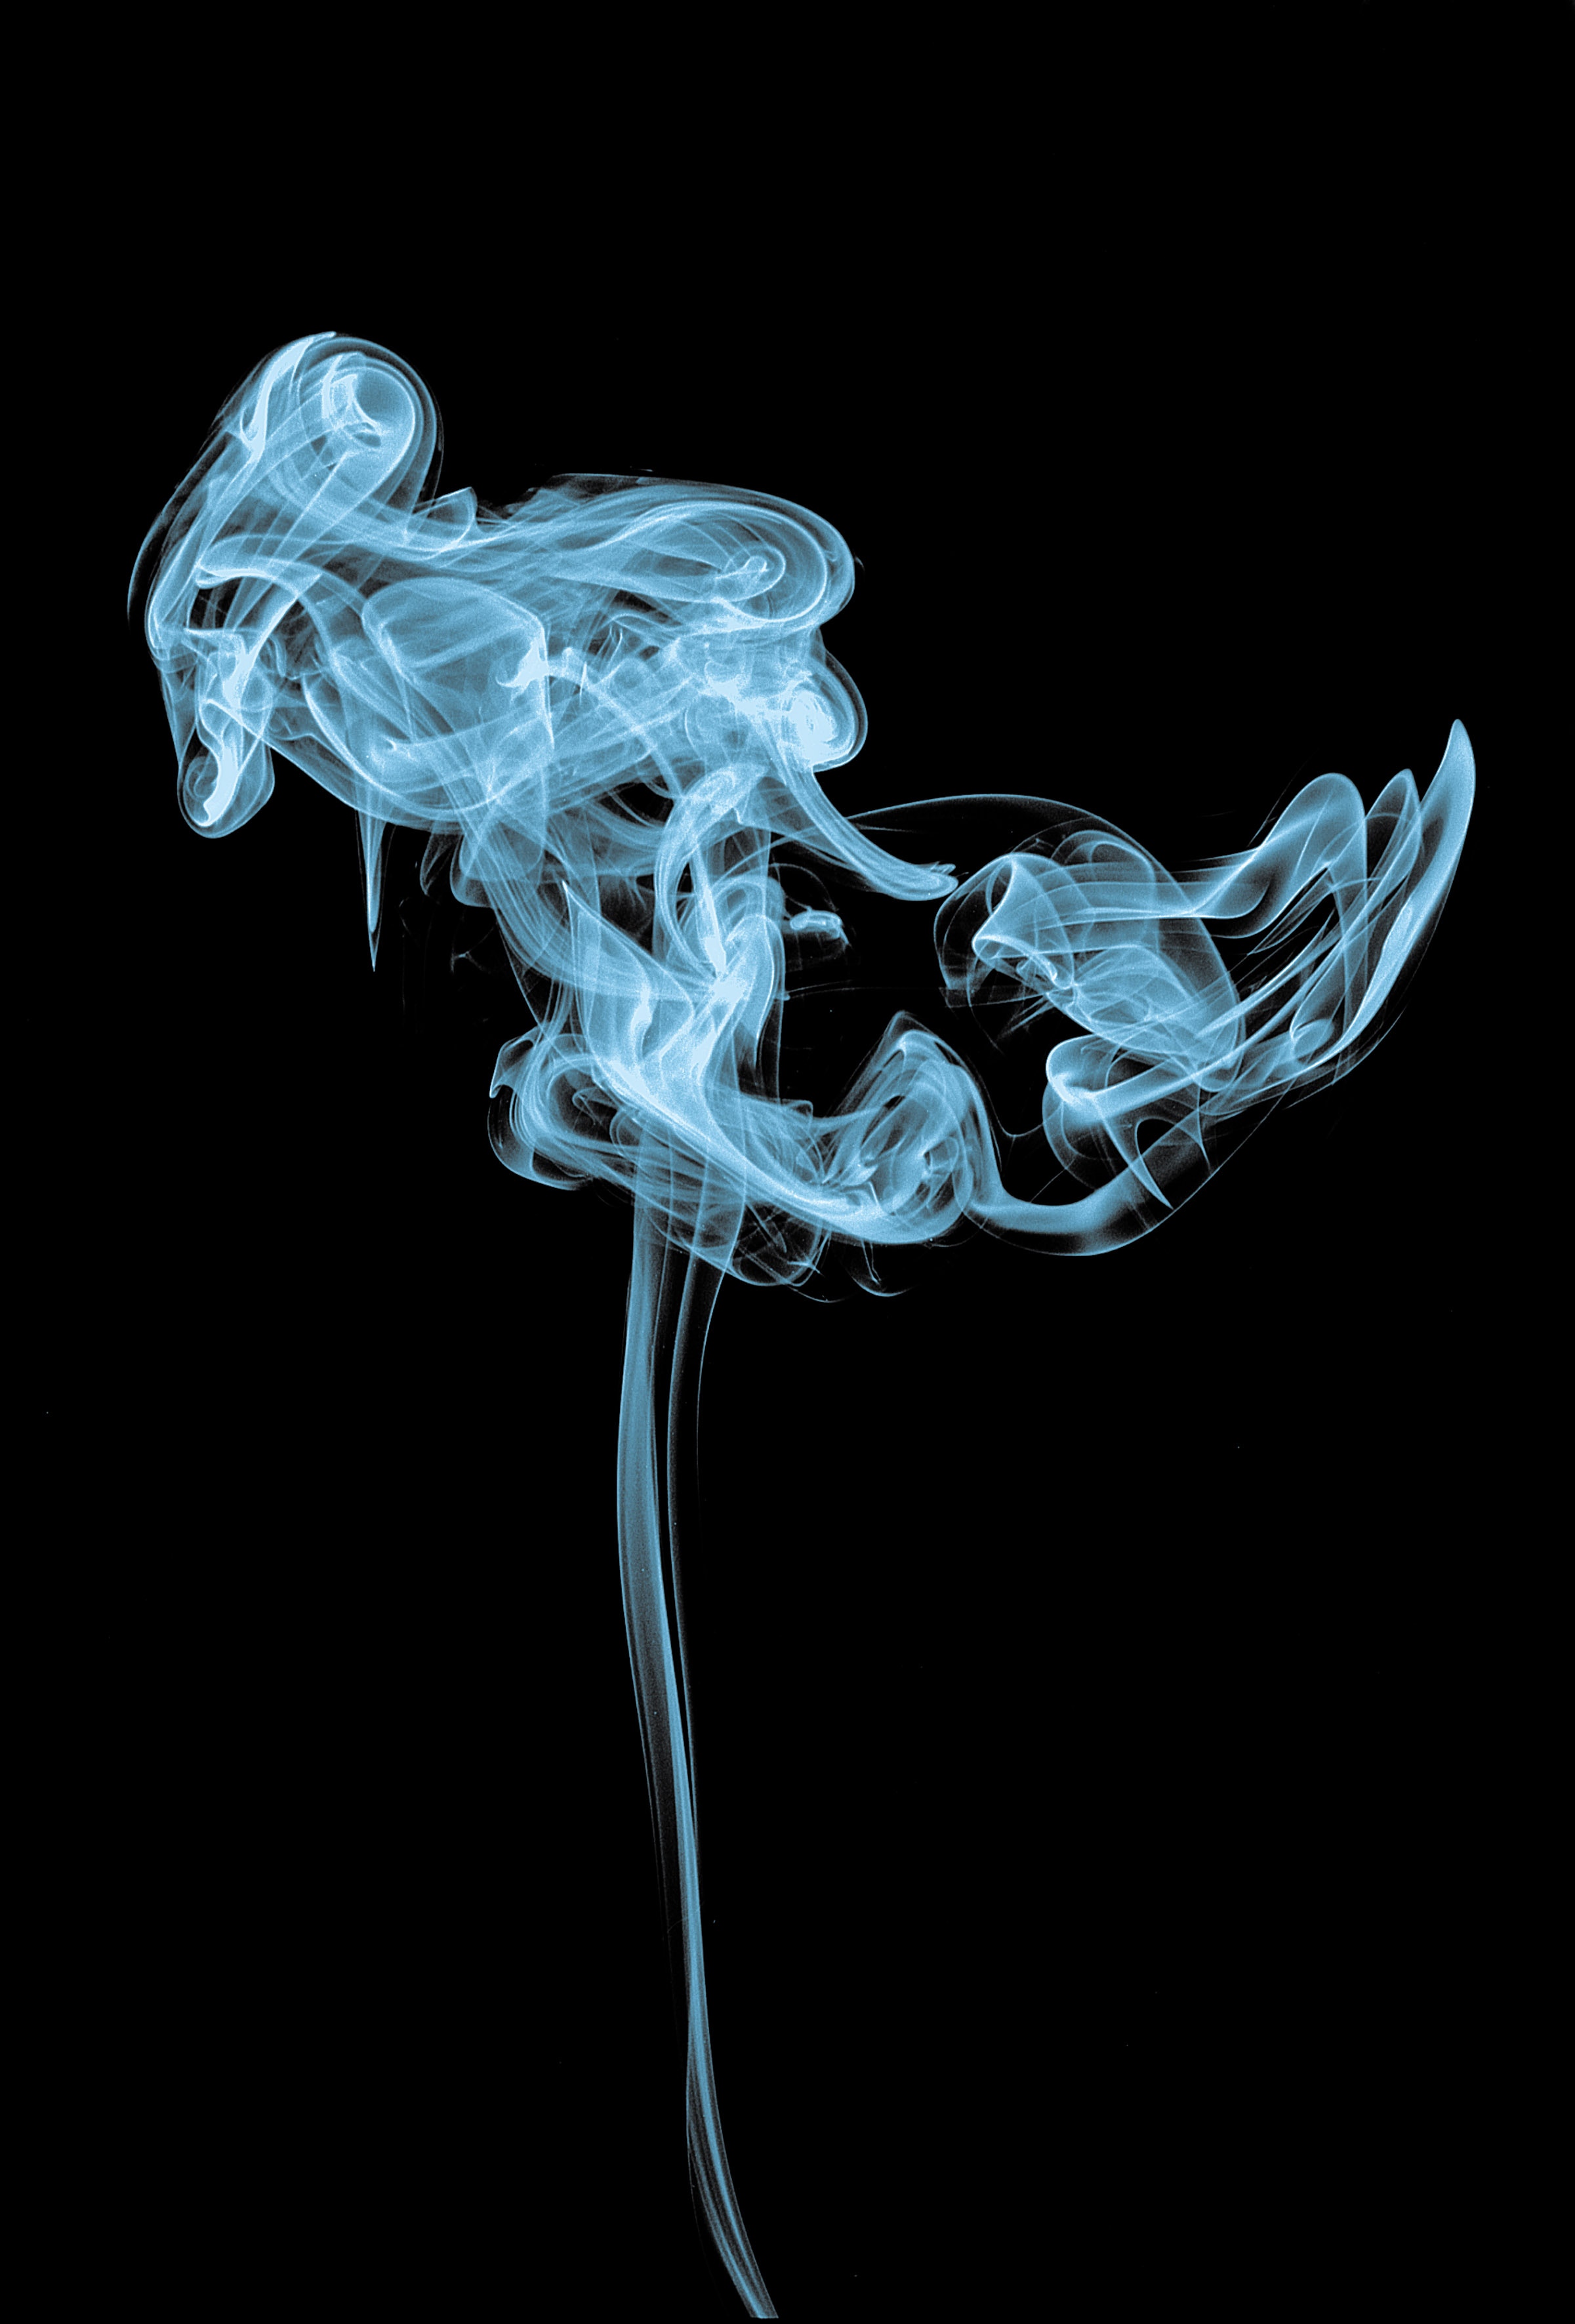 abstract, smoke, dark background, shroud, coils Full HD